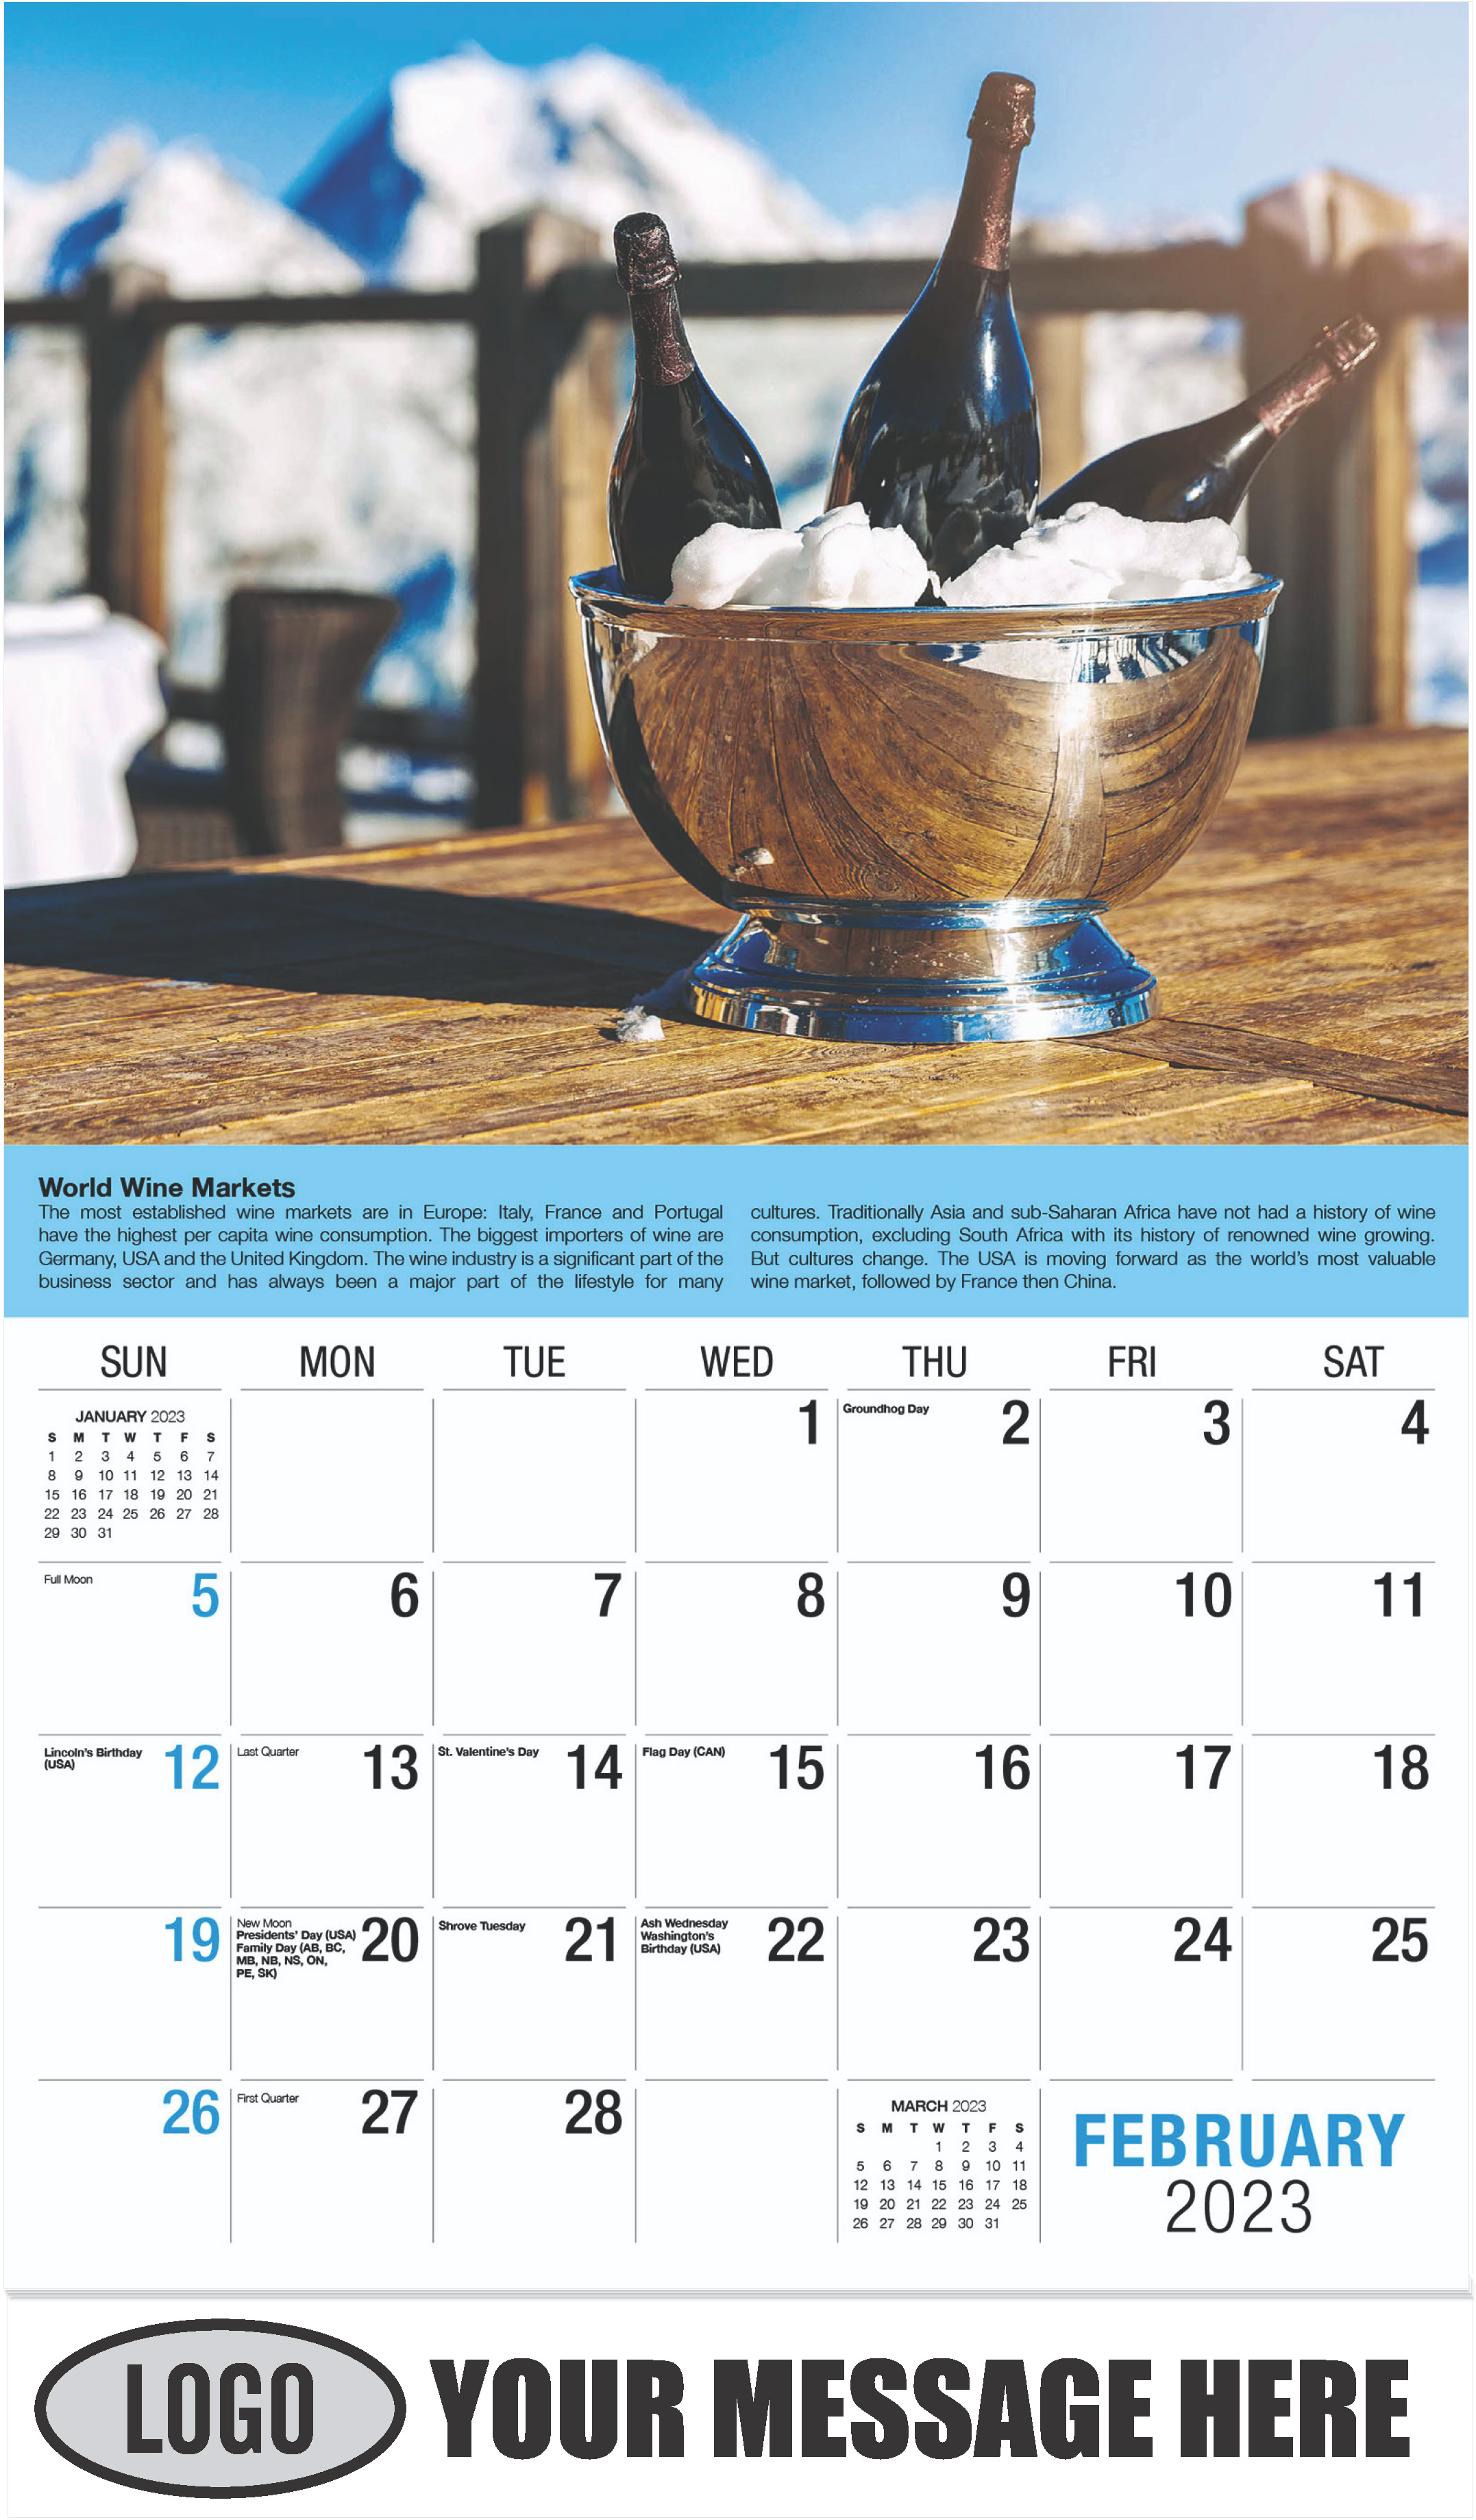 Wine Tips Calendar - February - Vintages 2023 Promotional Calendar